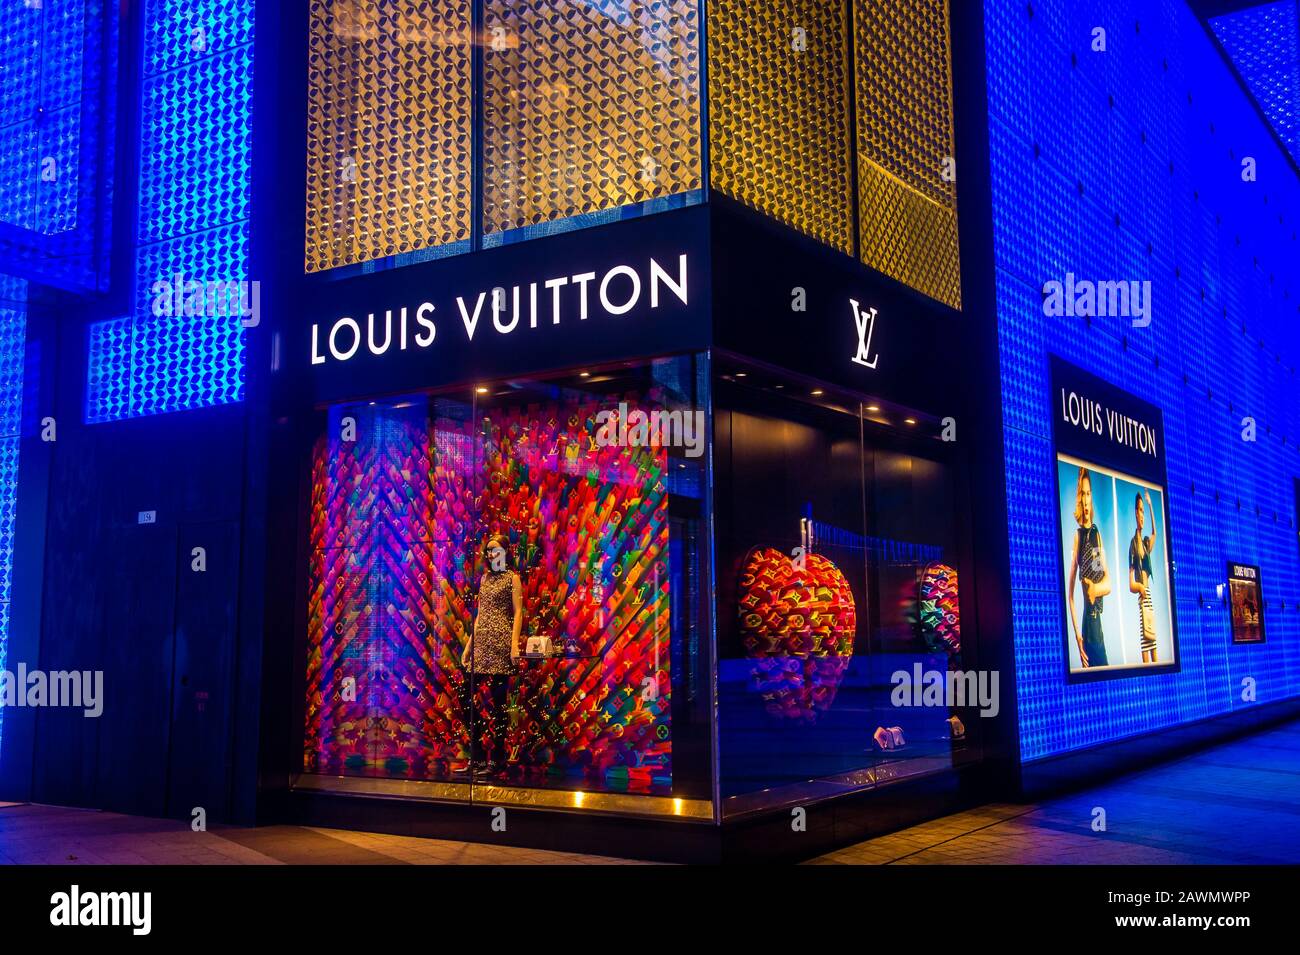 Woman Walks Louis Vuitton Boutique Beijing China November 2008 – Stock  Editorial Photo © ChinaImages #245216078